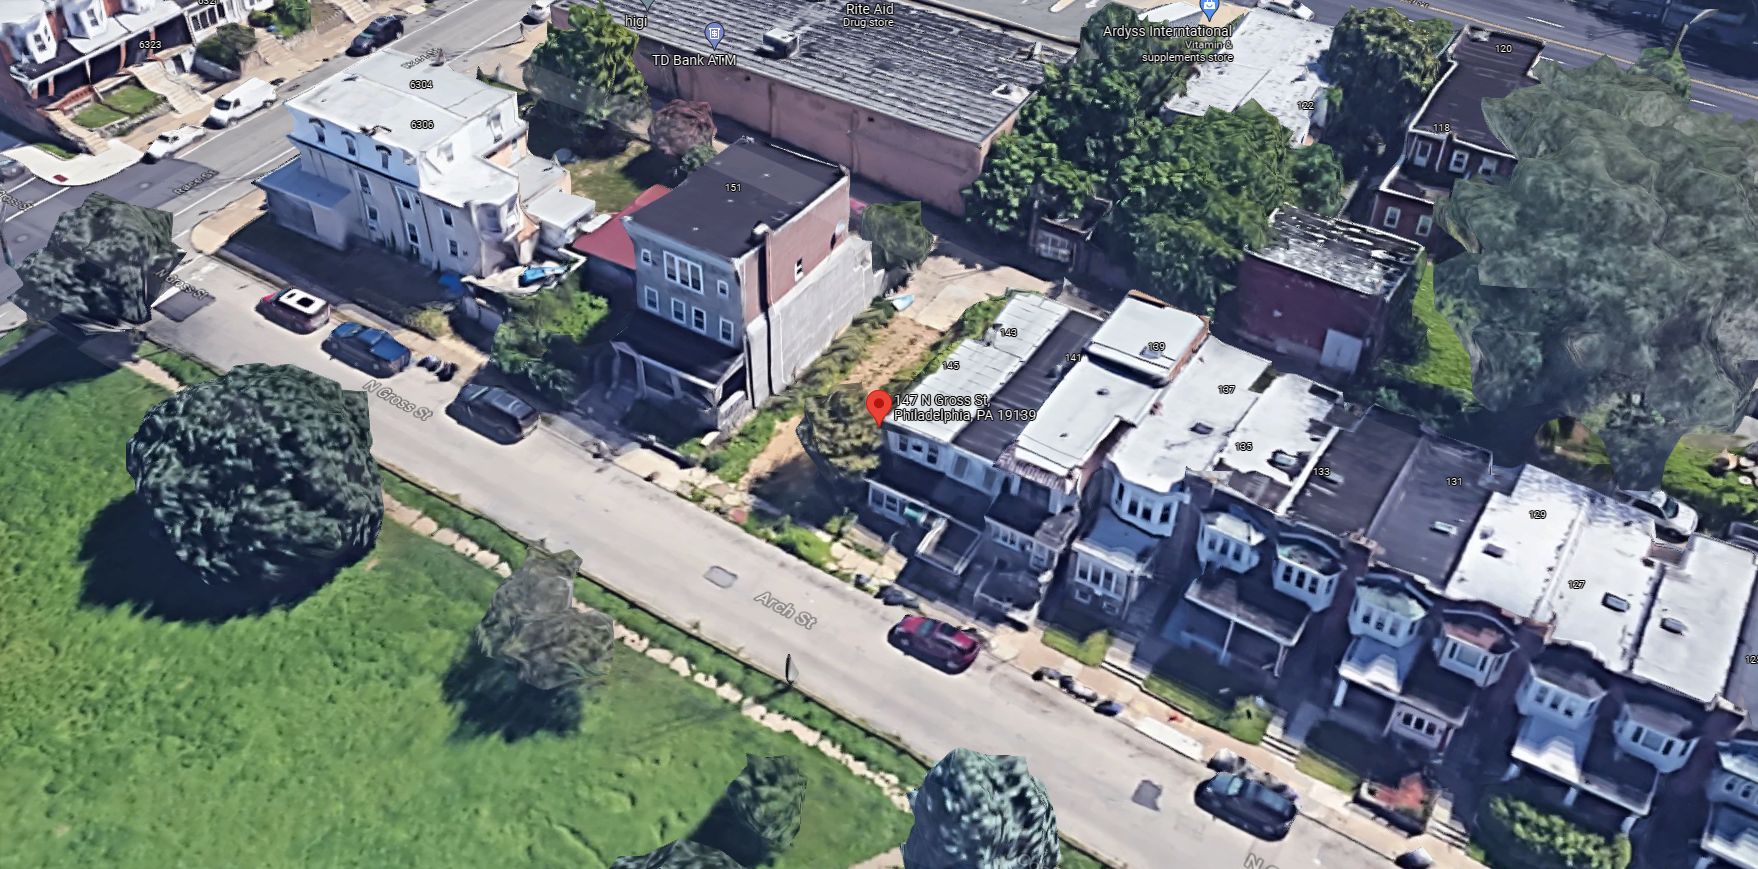 147-149 North Gross Street. Looking northeast. Credit: Google Maps